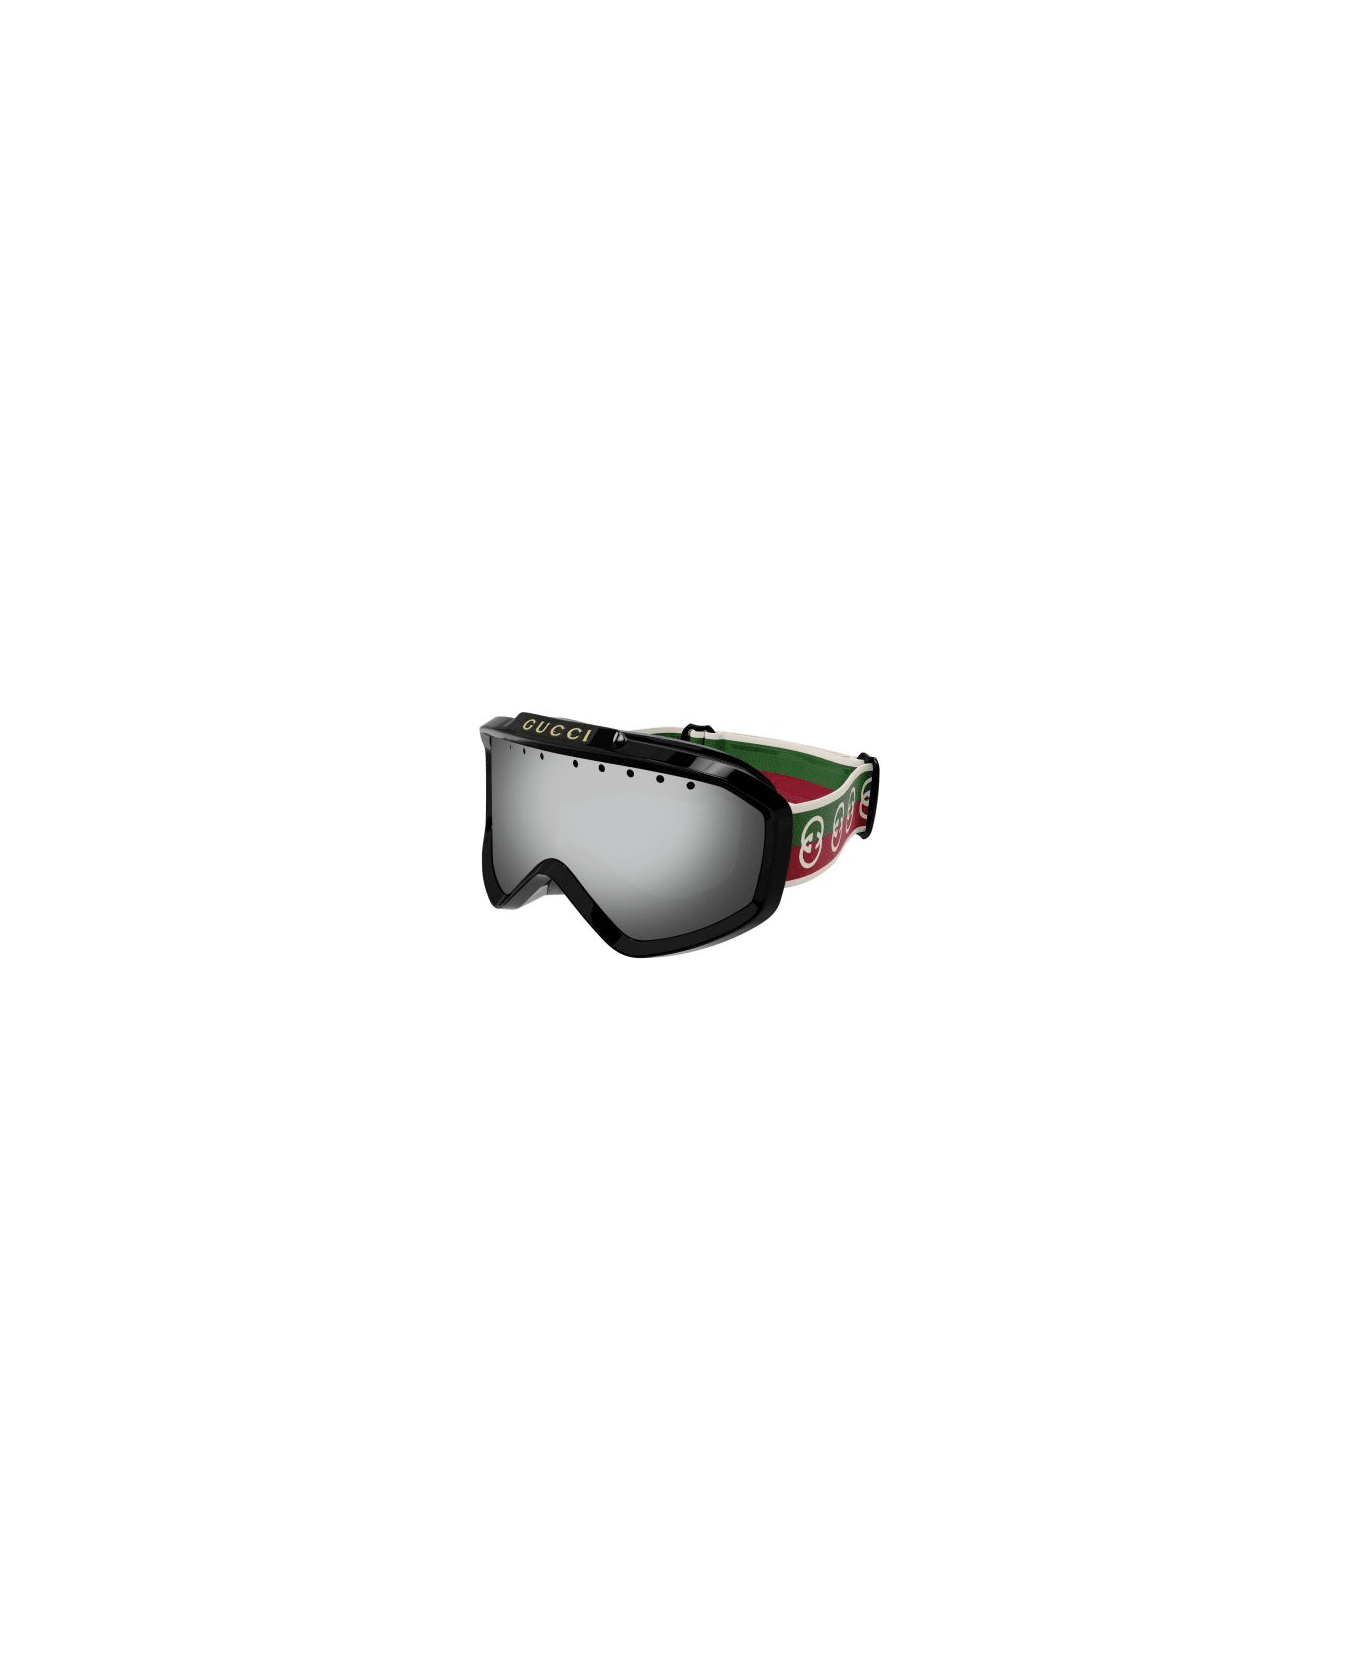 Gucci Eyewear Gg1210s Sunglasses - 001 black green silver